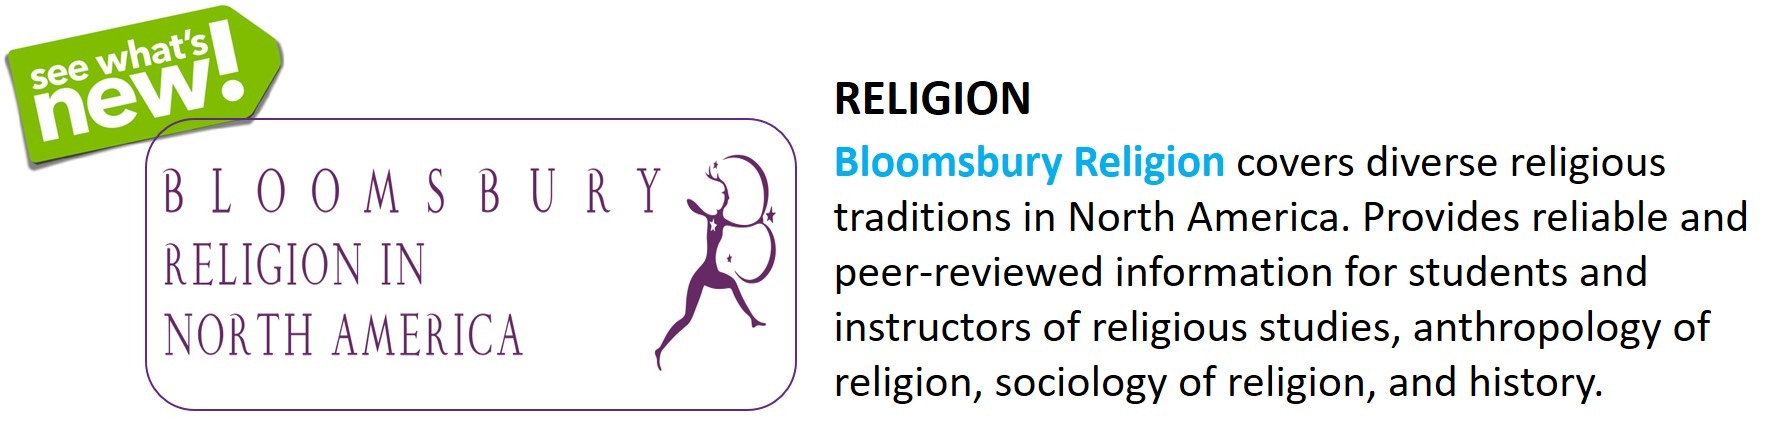 Library - Bloomsbury Religion